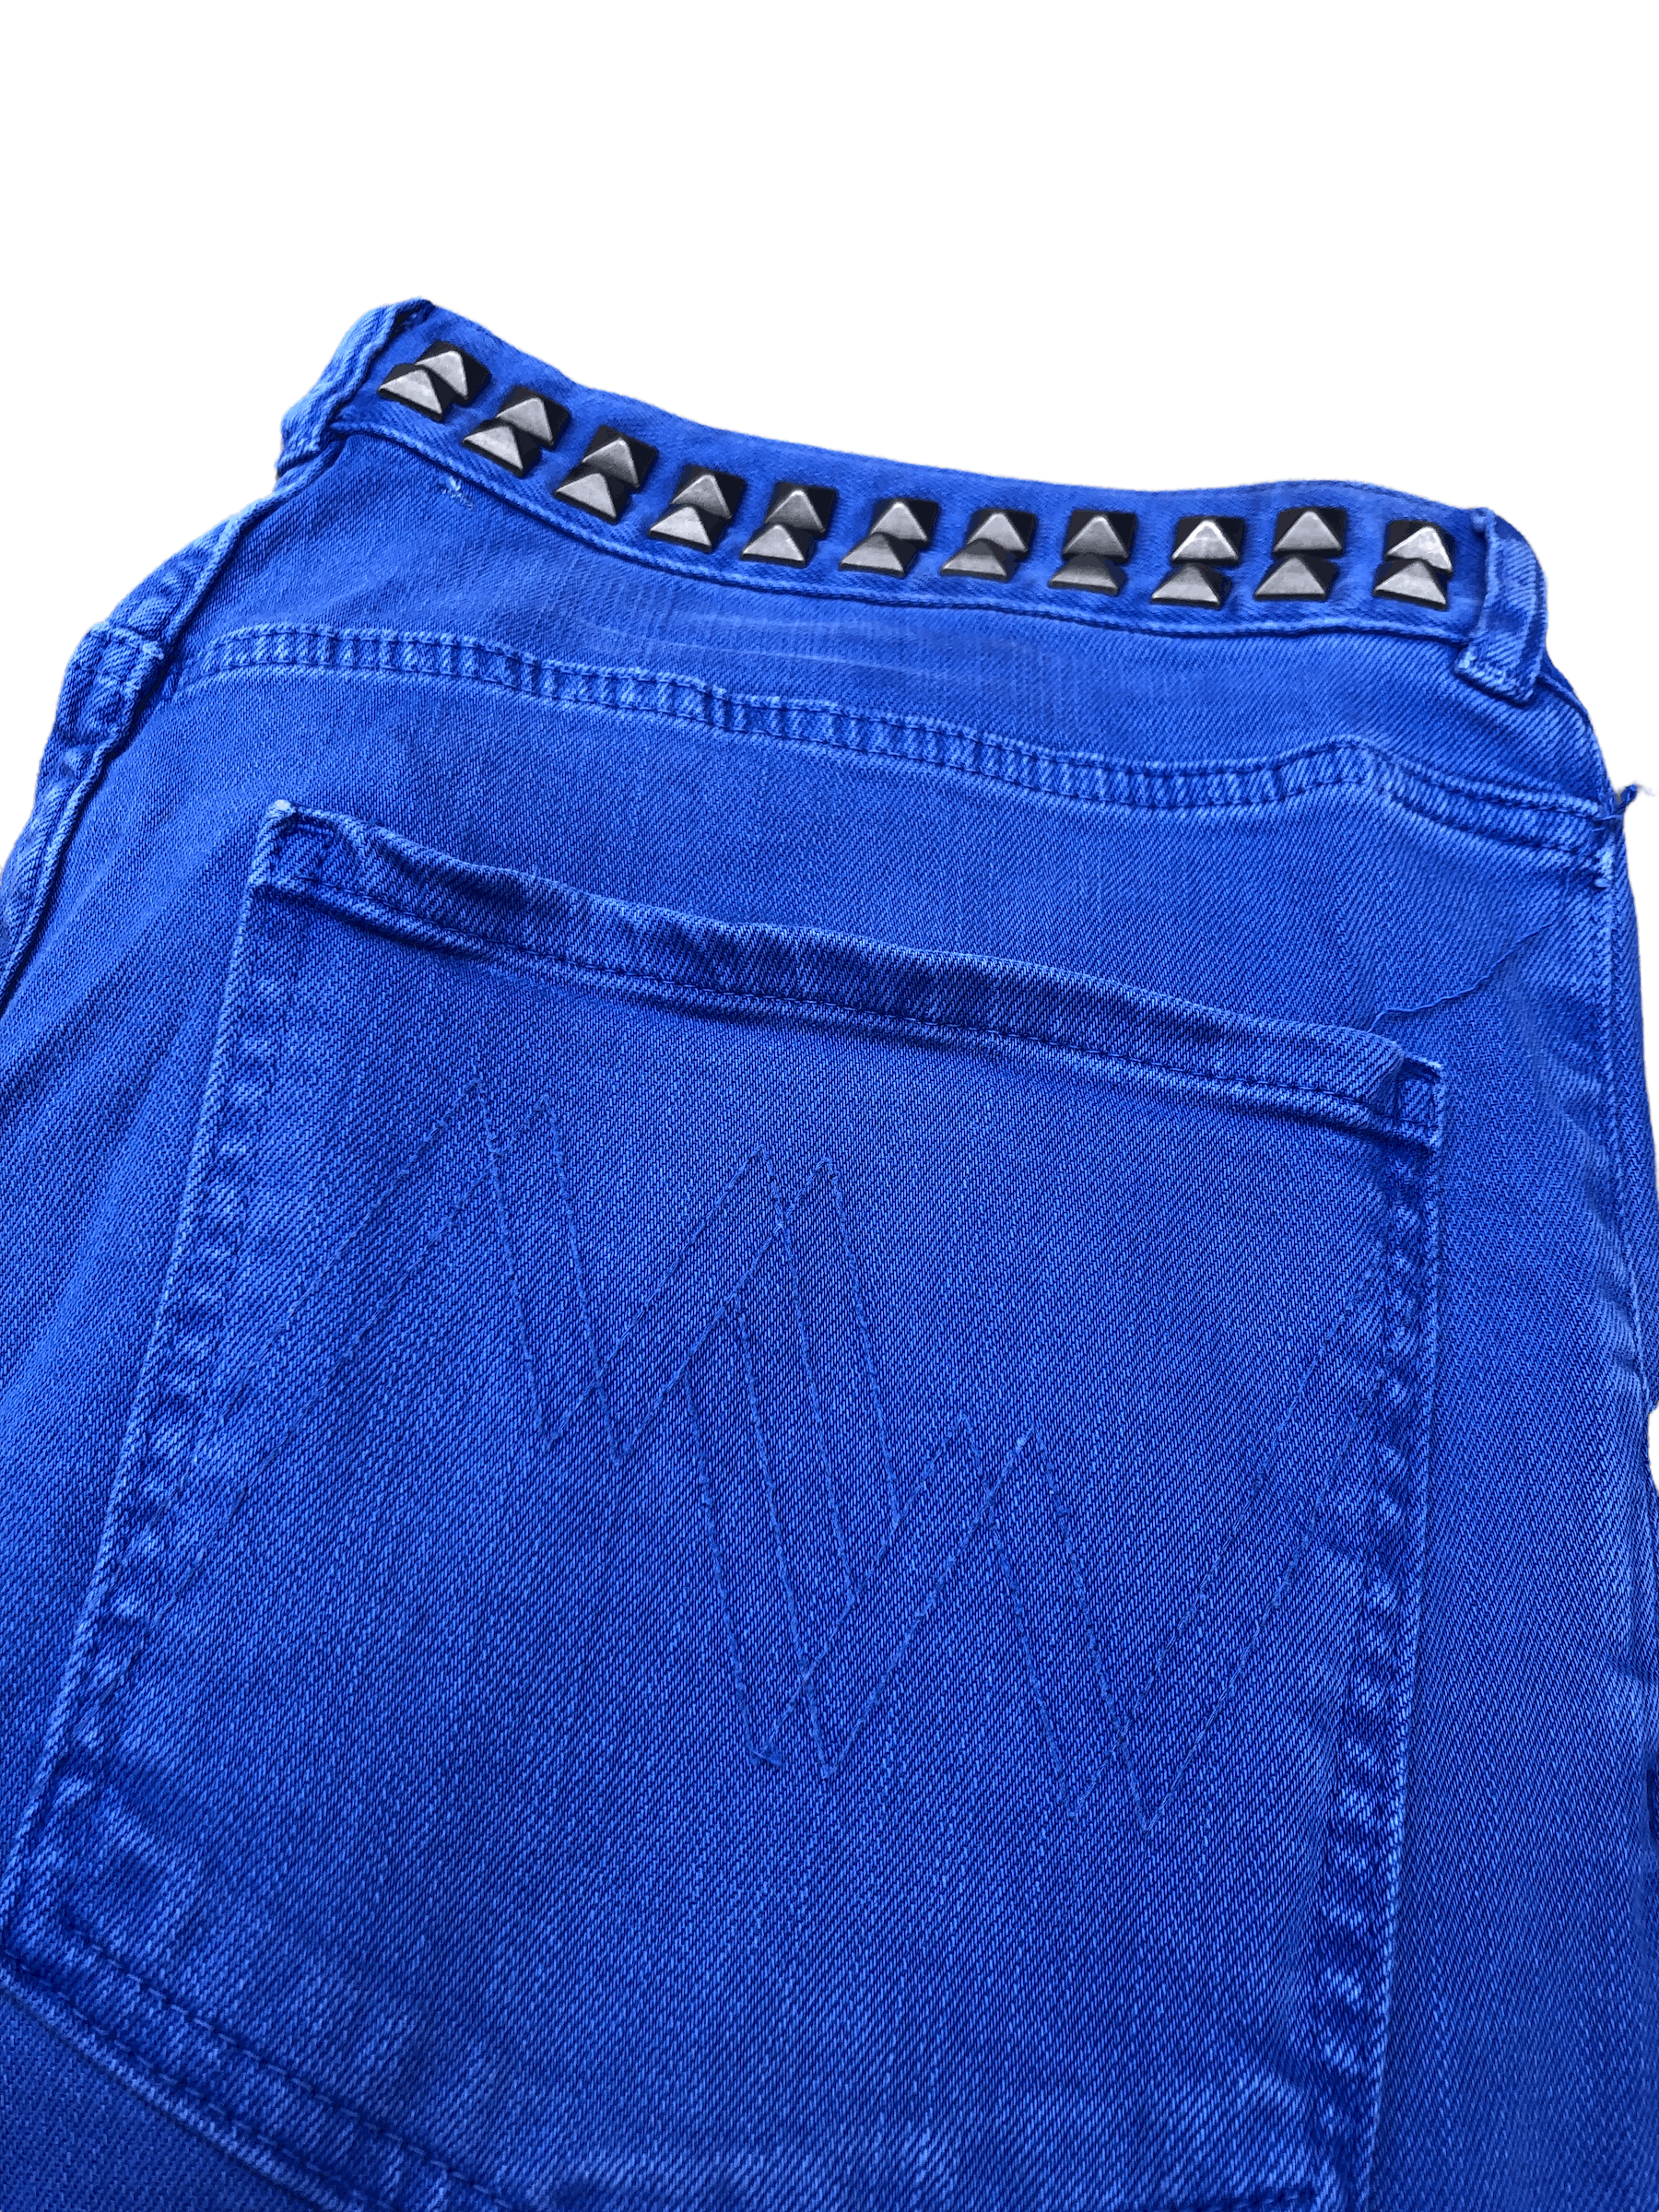 Vintage RARE Matthew Williamson X H&M Studded Jeans Size 34 Blue Size US 34 / EU 50 - 7 Thumbnail